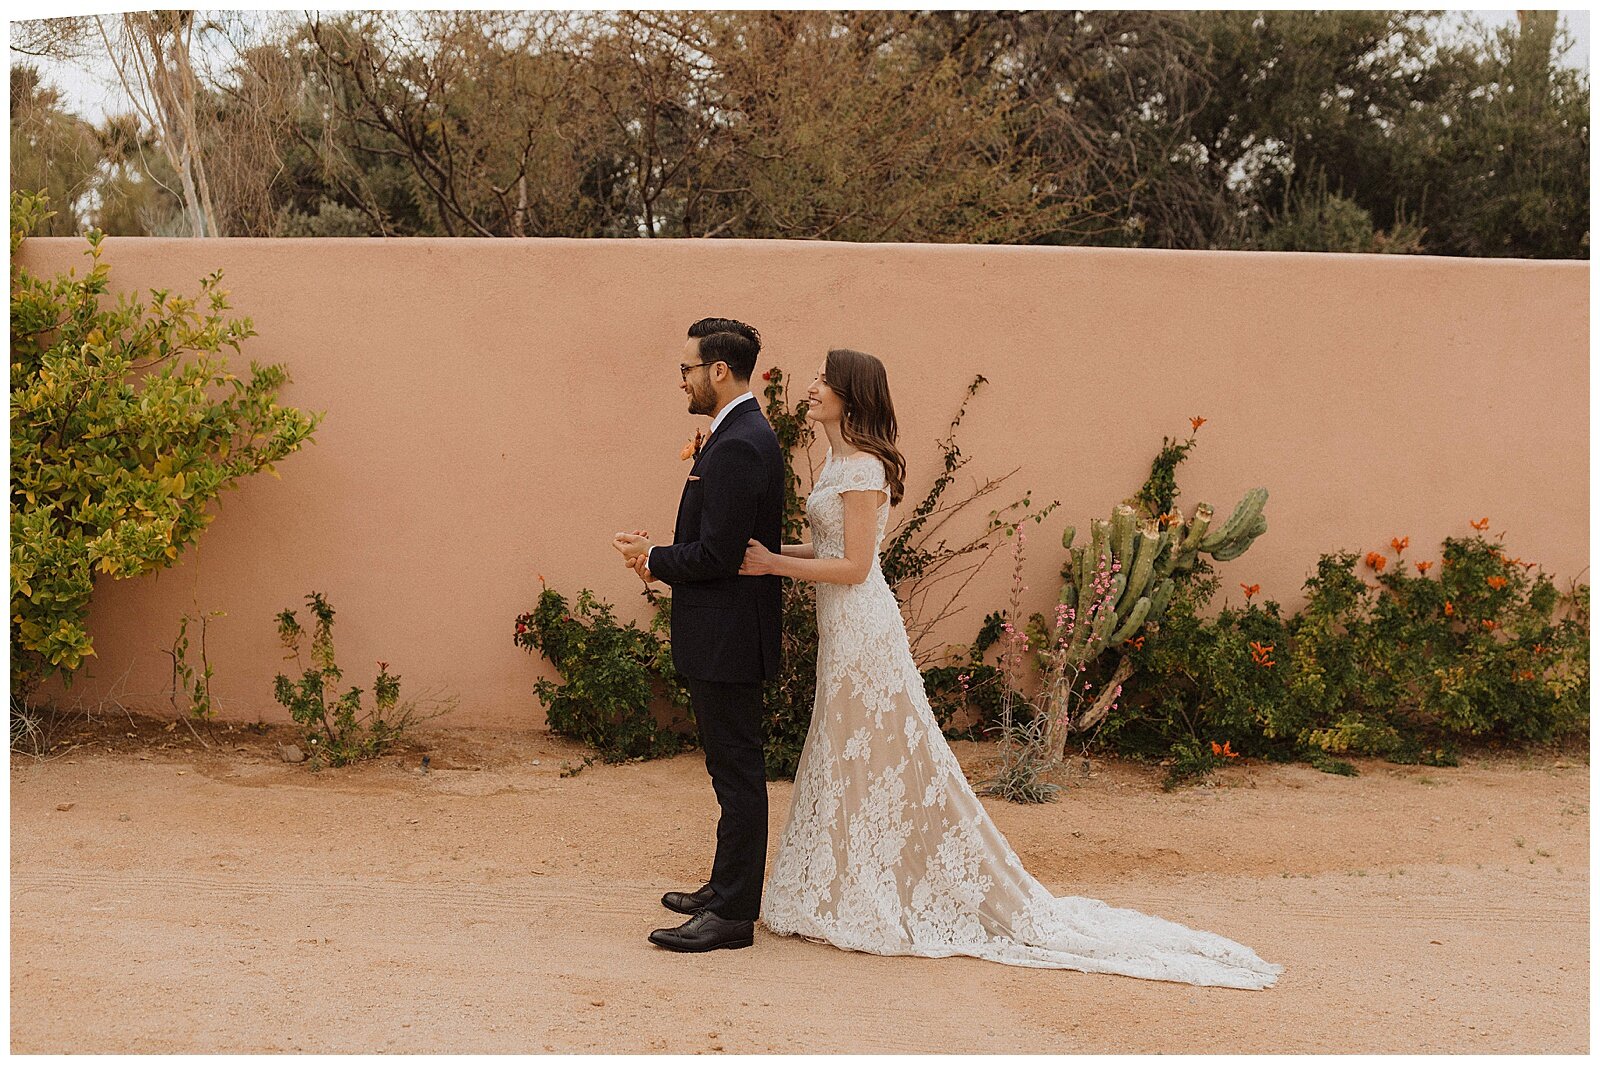 La Posada Saguaro National Park Wedding - Erika Greene Photography - Arizona Elopement Photographer_0013.jpg